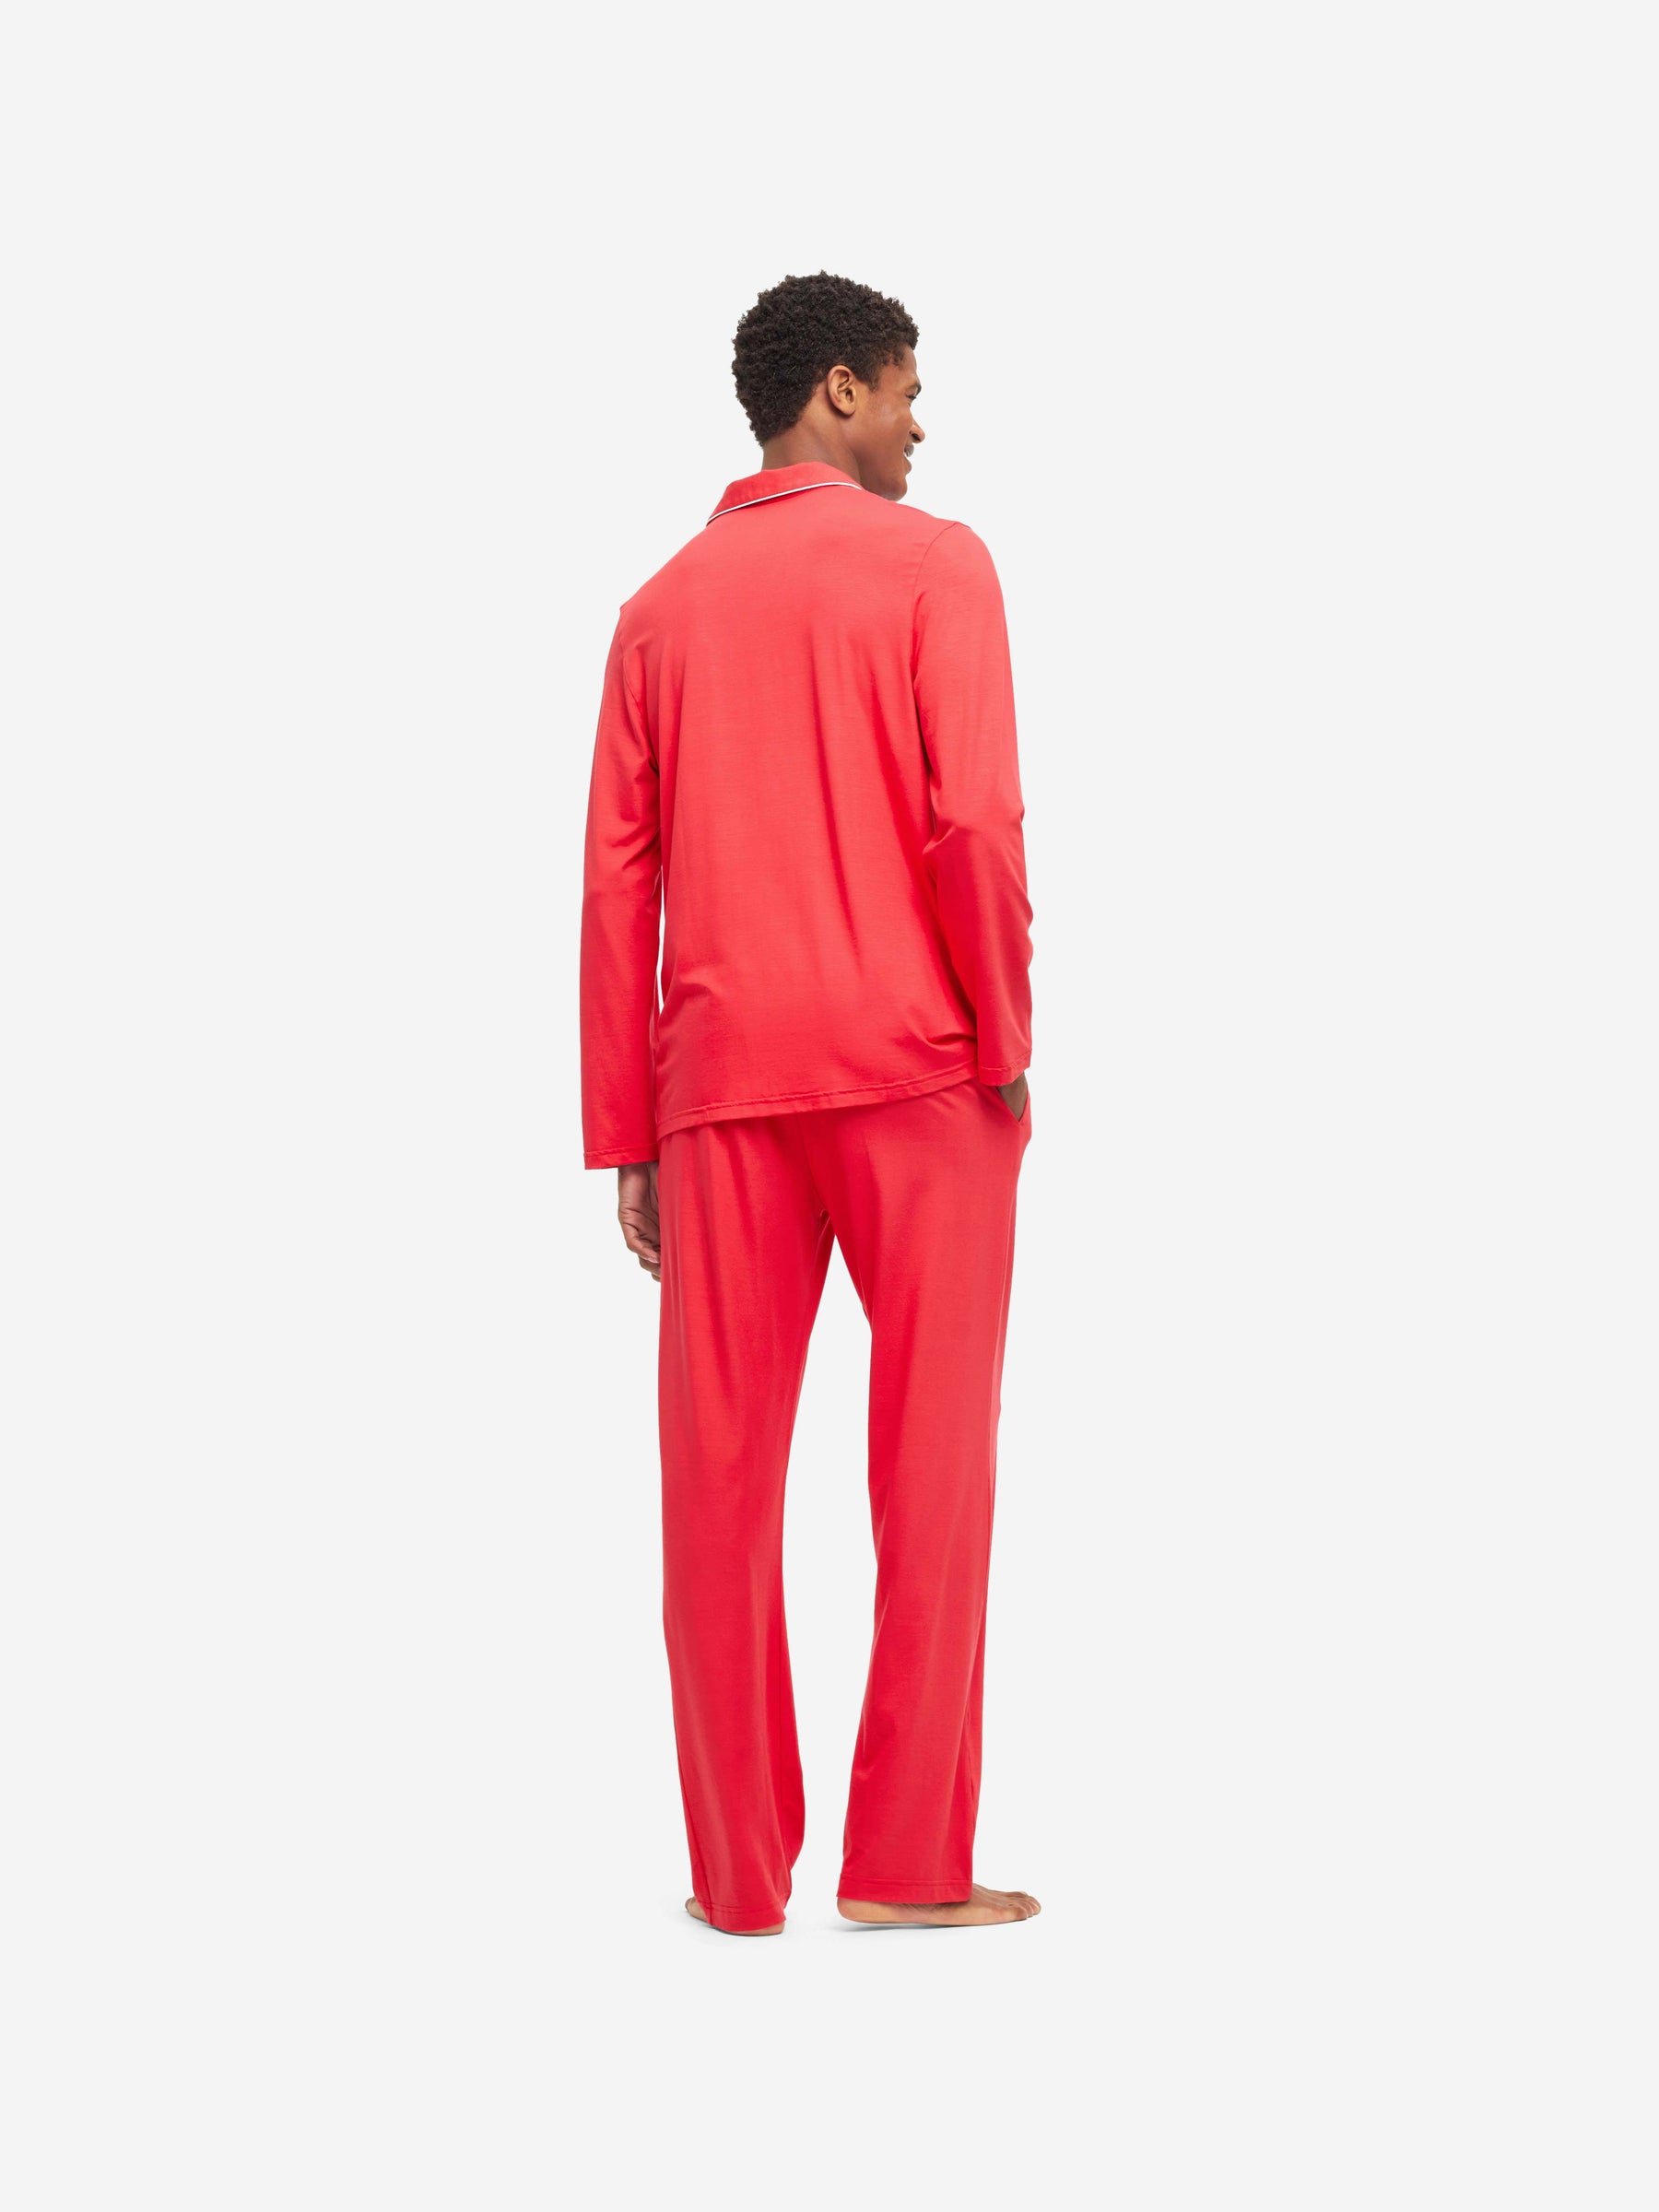 Men's Pyjamas Basel Micro Modal Stretch London Red